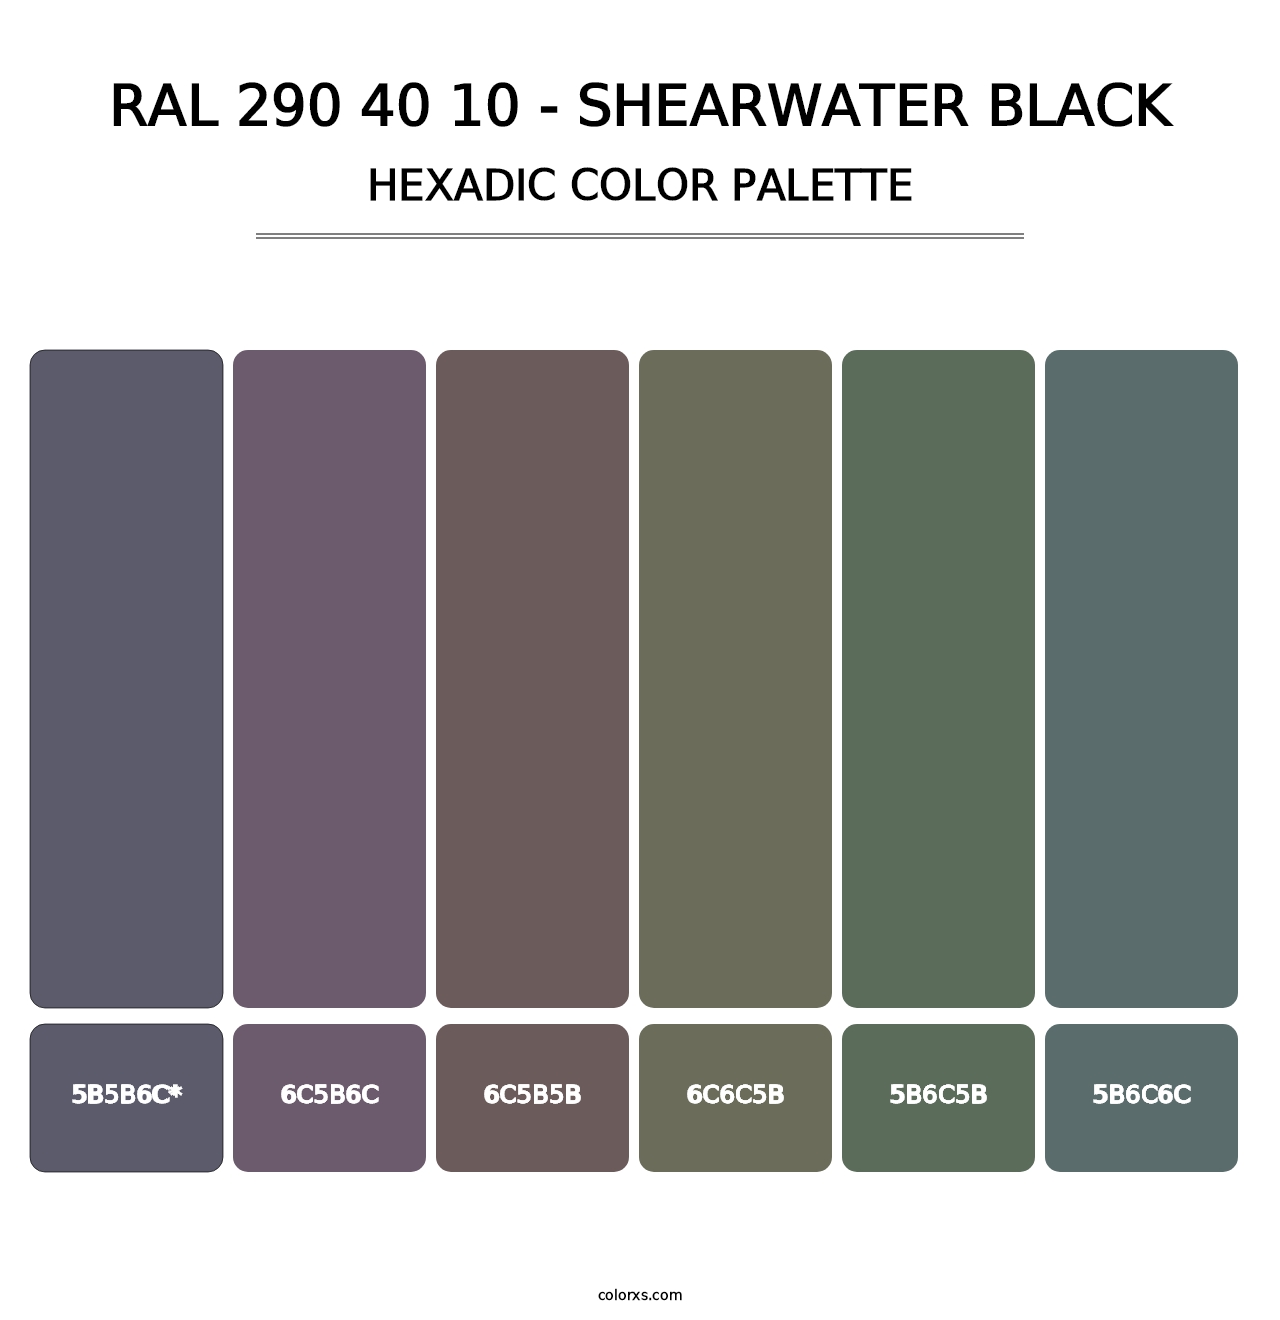 RAL 290 40 10 - Shearwater Black - Hexadic Color Palette